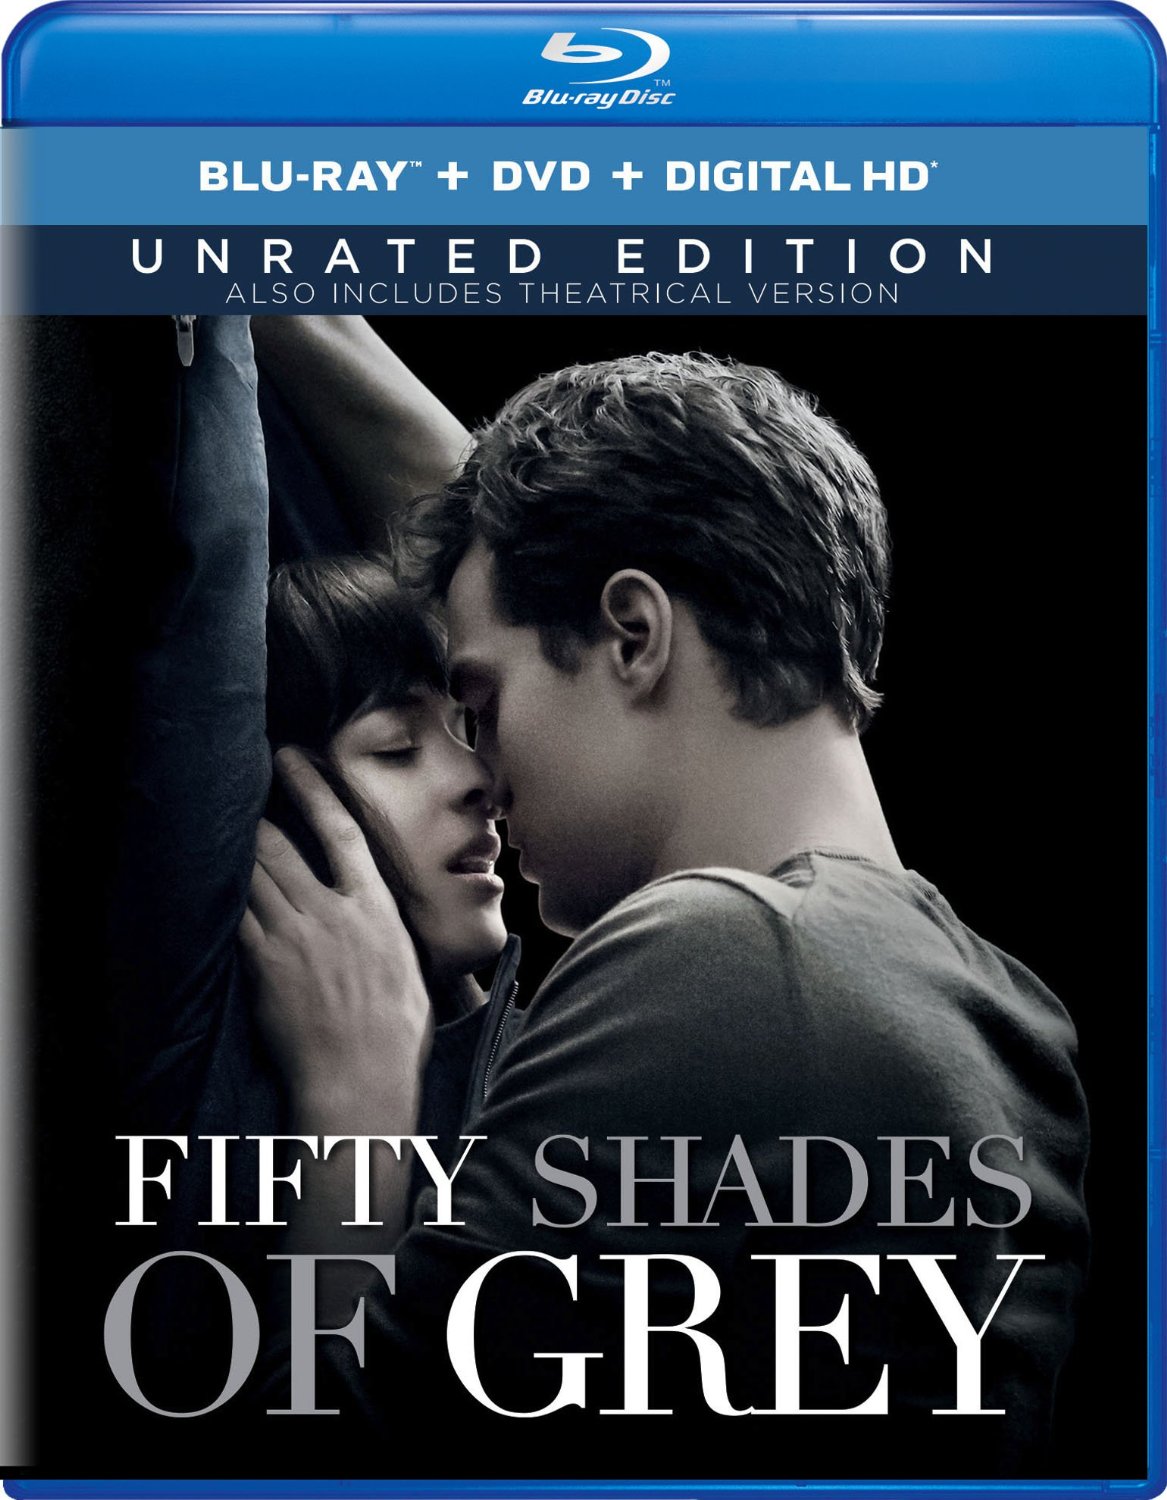 Fifty Shades Of Grey (Unseen Edition) (Blu-ray), Sam Taylor-Johnson